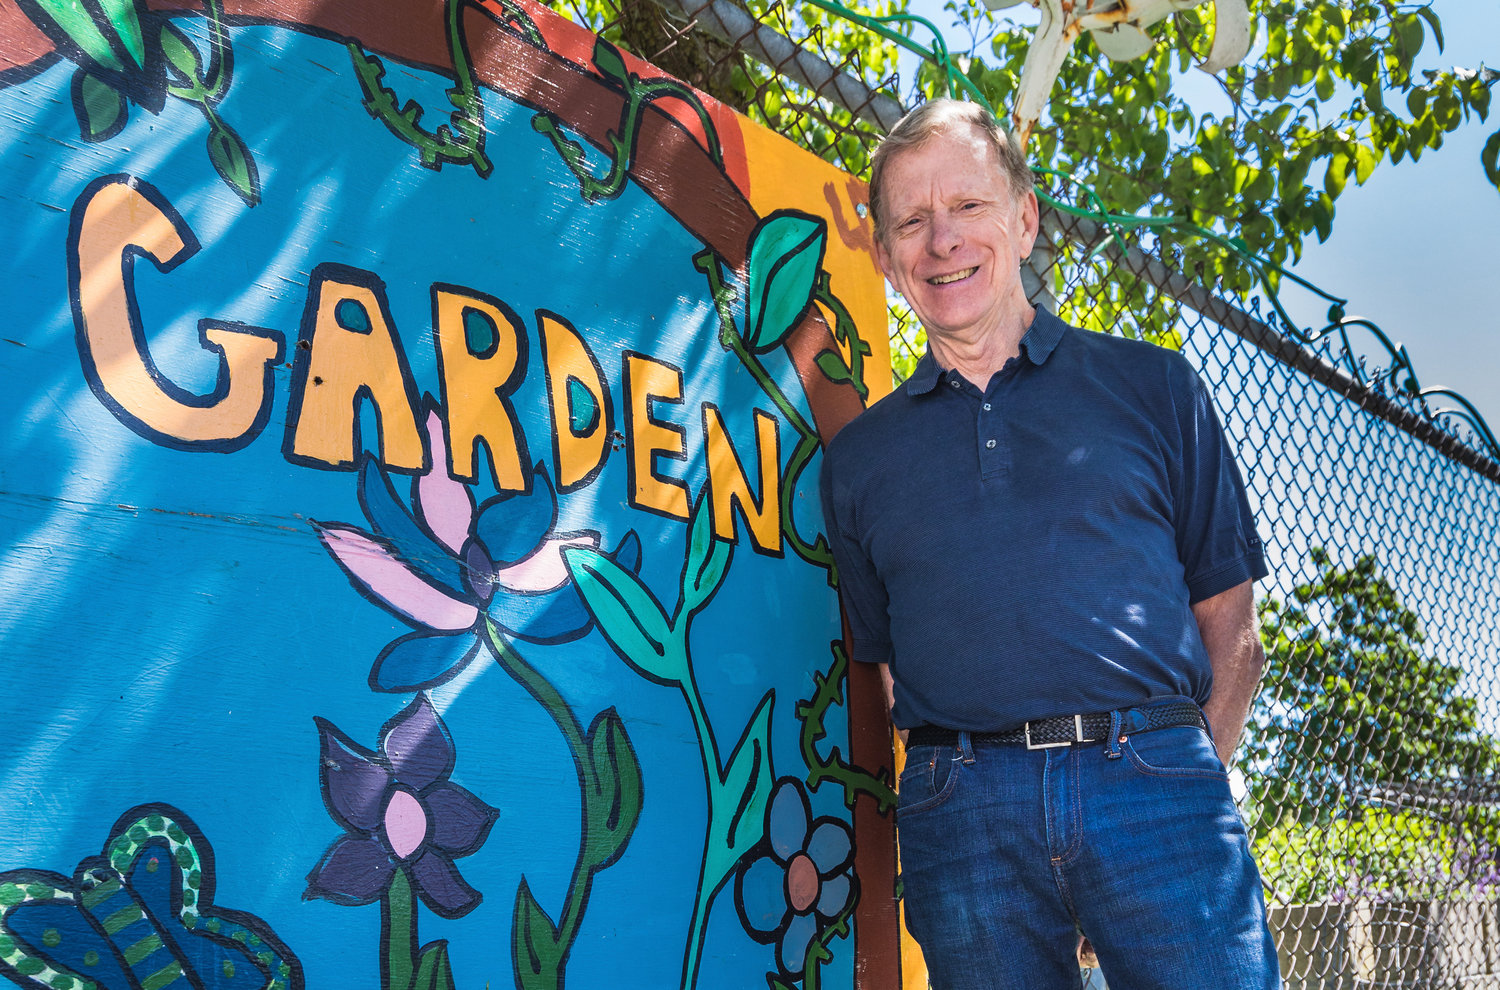 Garden Leader 
Doug Victor at 
Peace & Plenty Garden off Broad Street